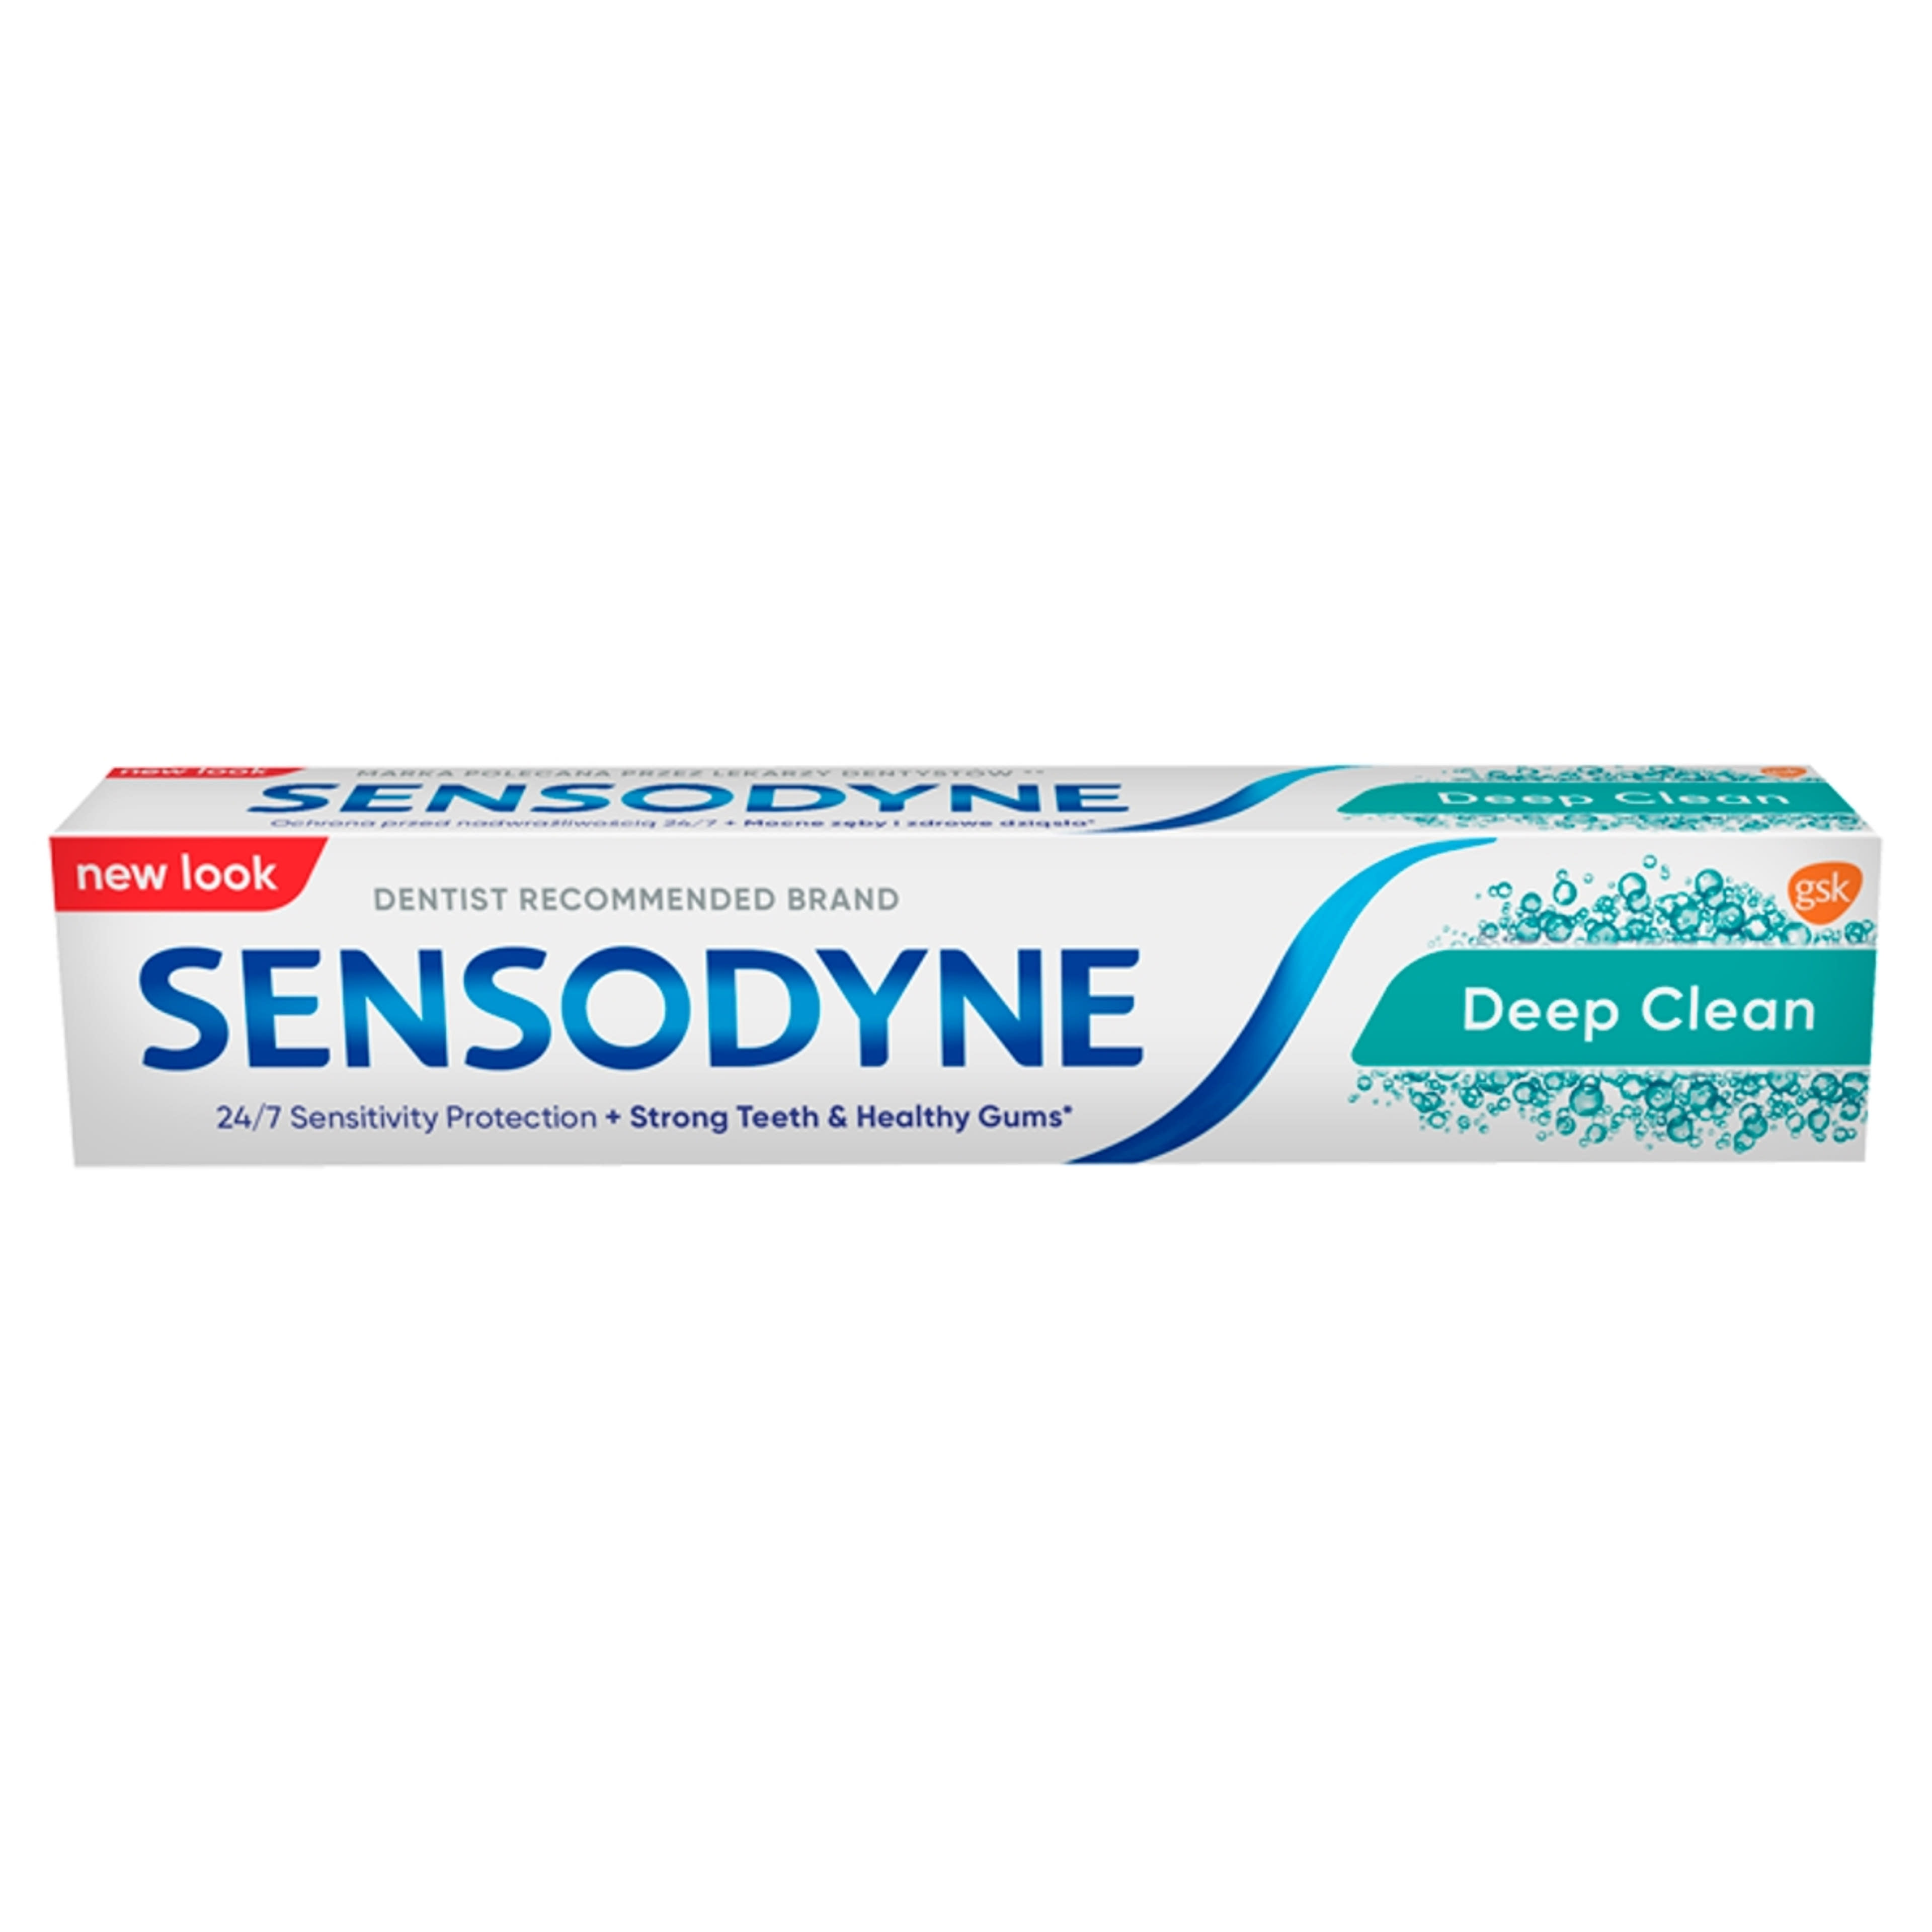 Sensodyne Deep Clean fogkrém - 75 ml-3